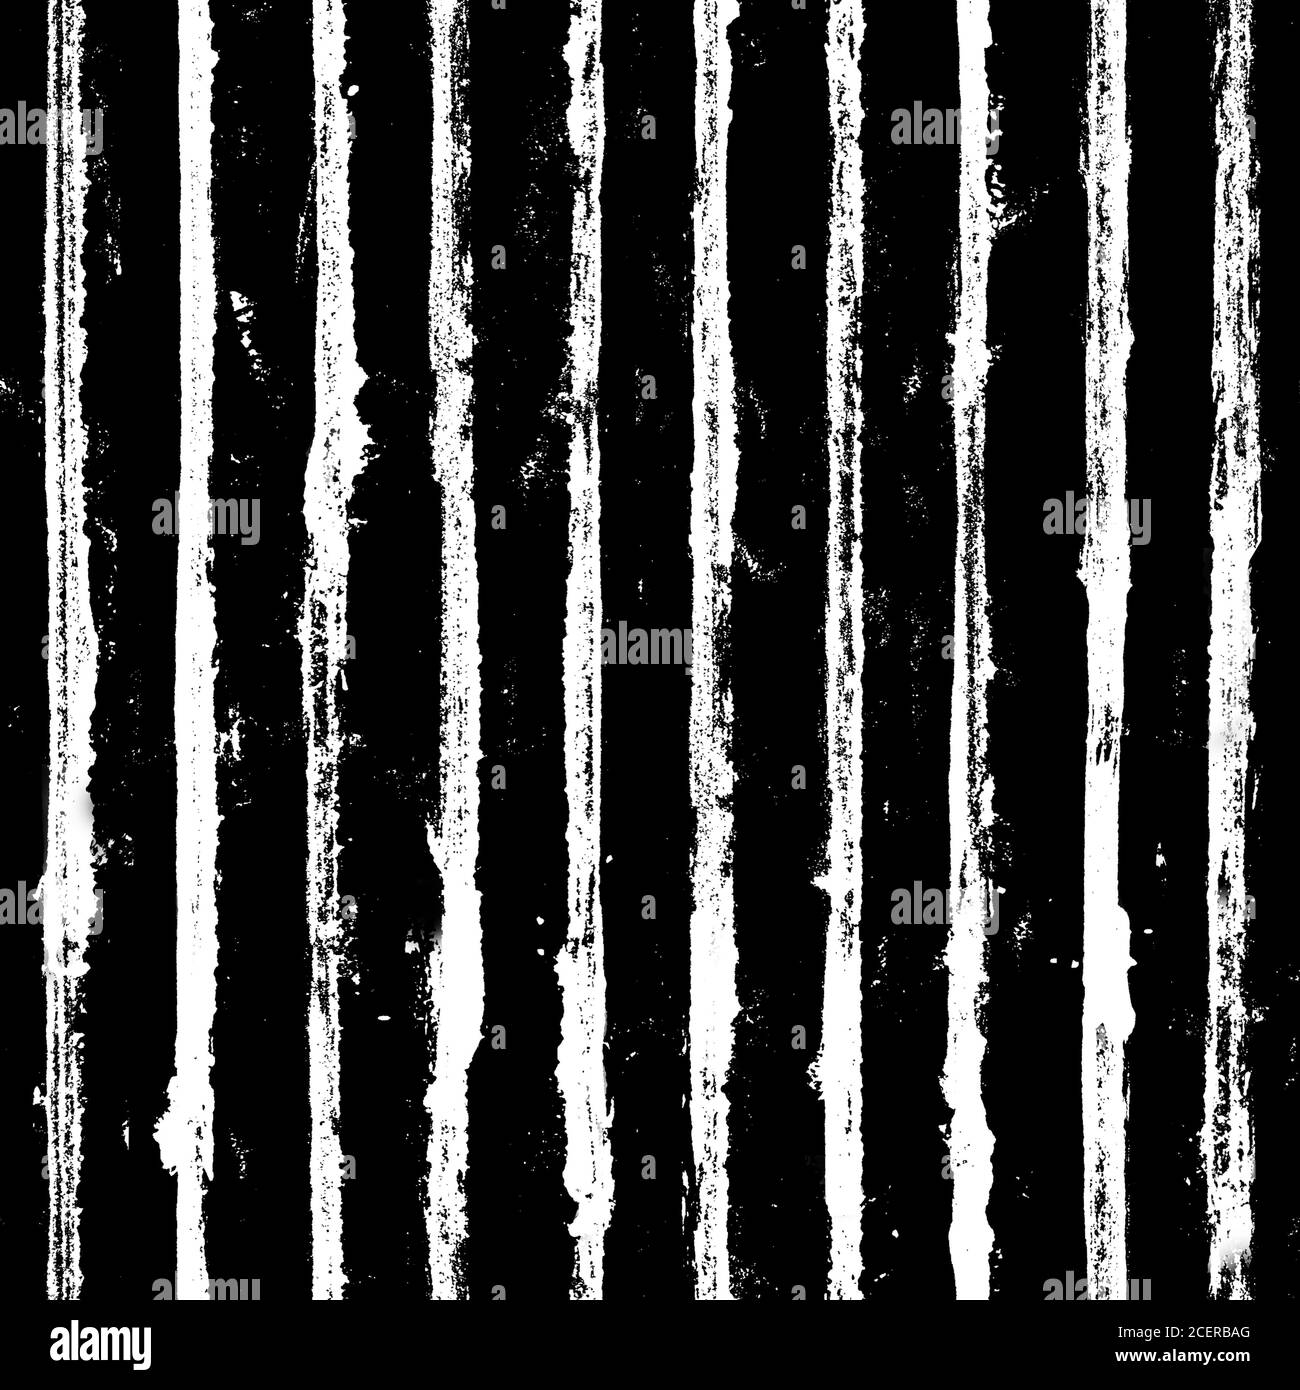 Black And White Stripe Grunge Seamless Pattern White Stripes On Black Background Hand Drawn Striped Texture Print For Textile Fabric Wallpaper Pa Stock Photo Alamy